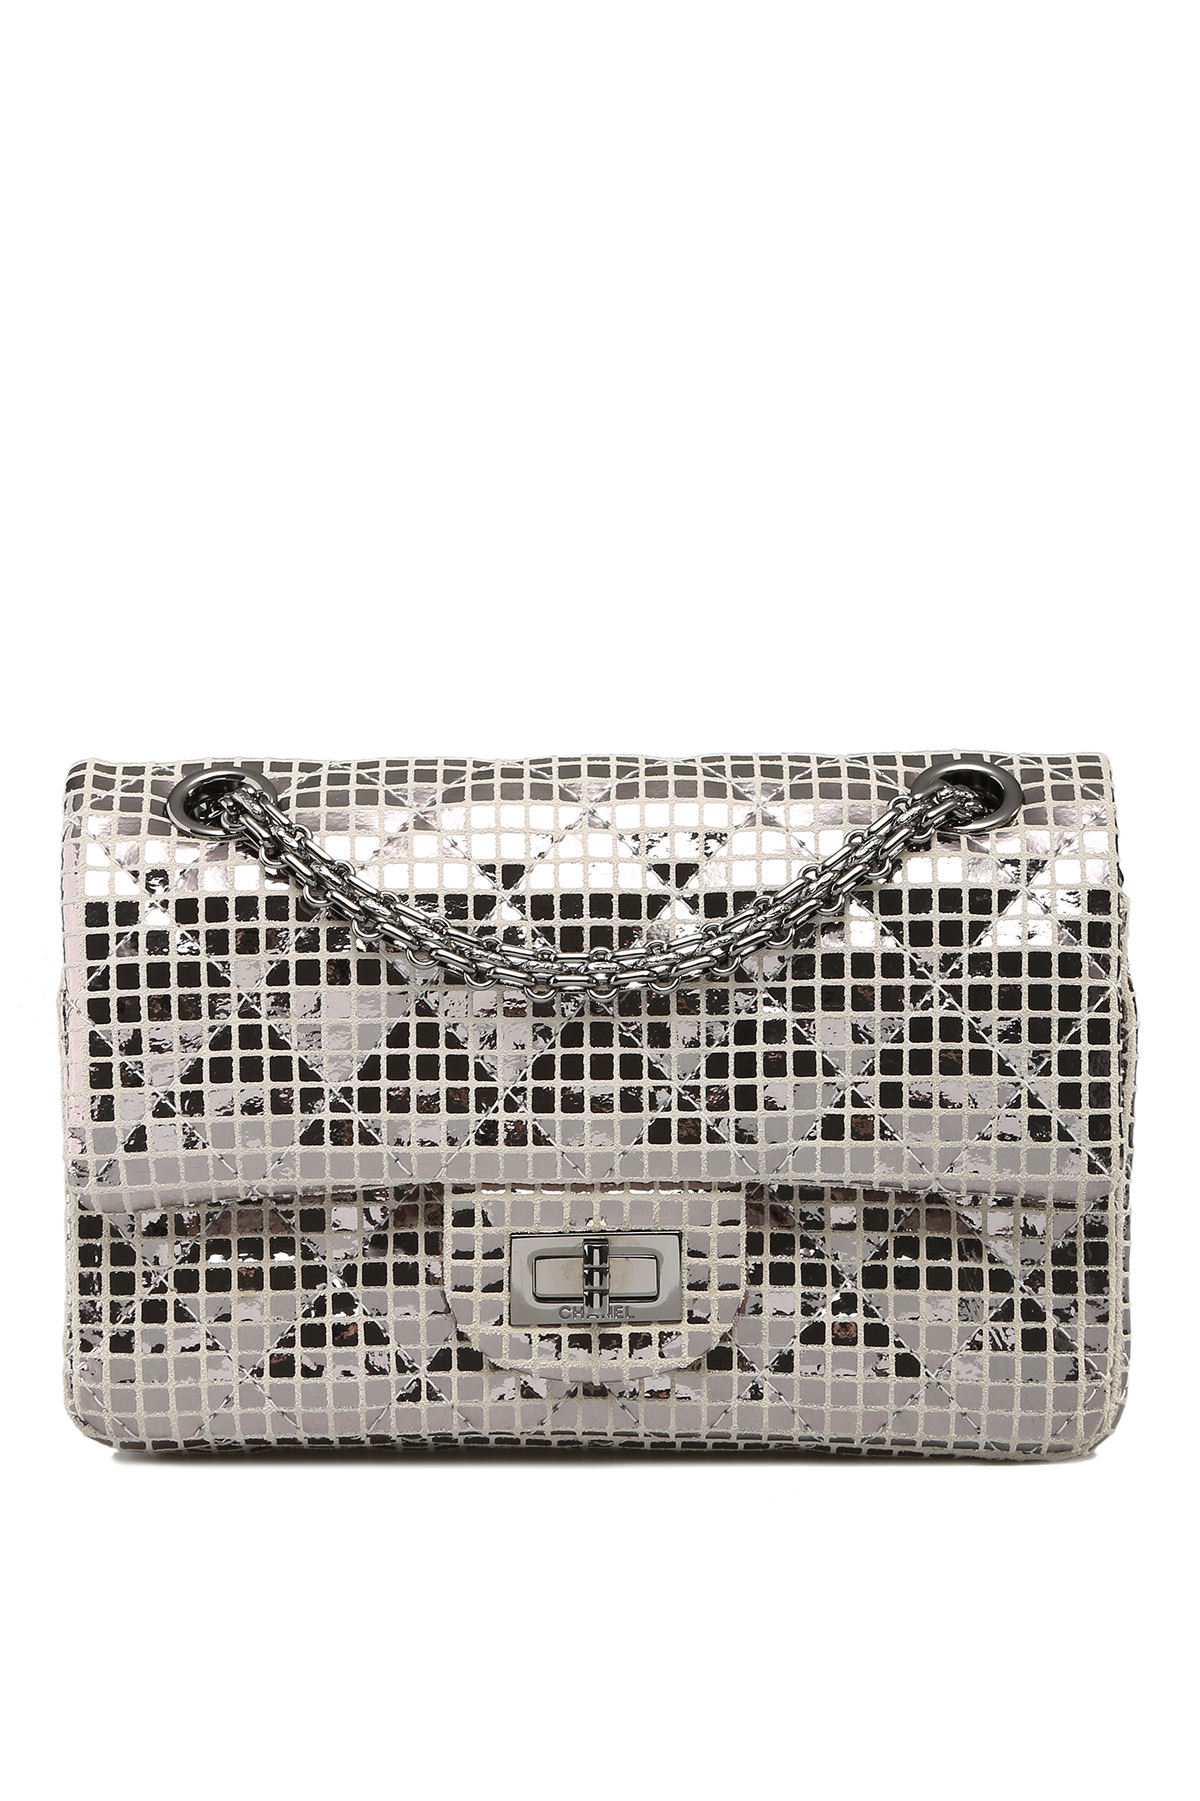 Women's Mirror Surface Silver Bag With Wavy Pattern, Versatile Fashionable  Handbag, Shoulder Bag, Crossbody Bag